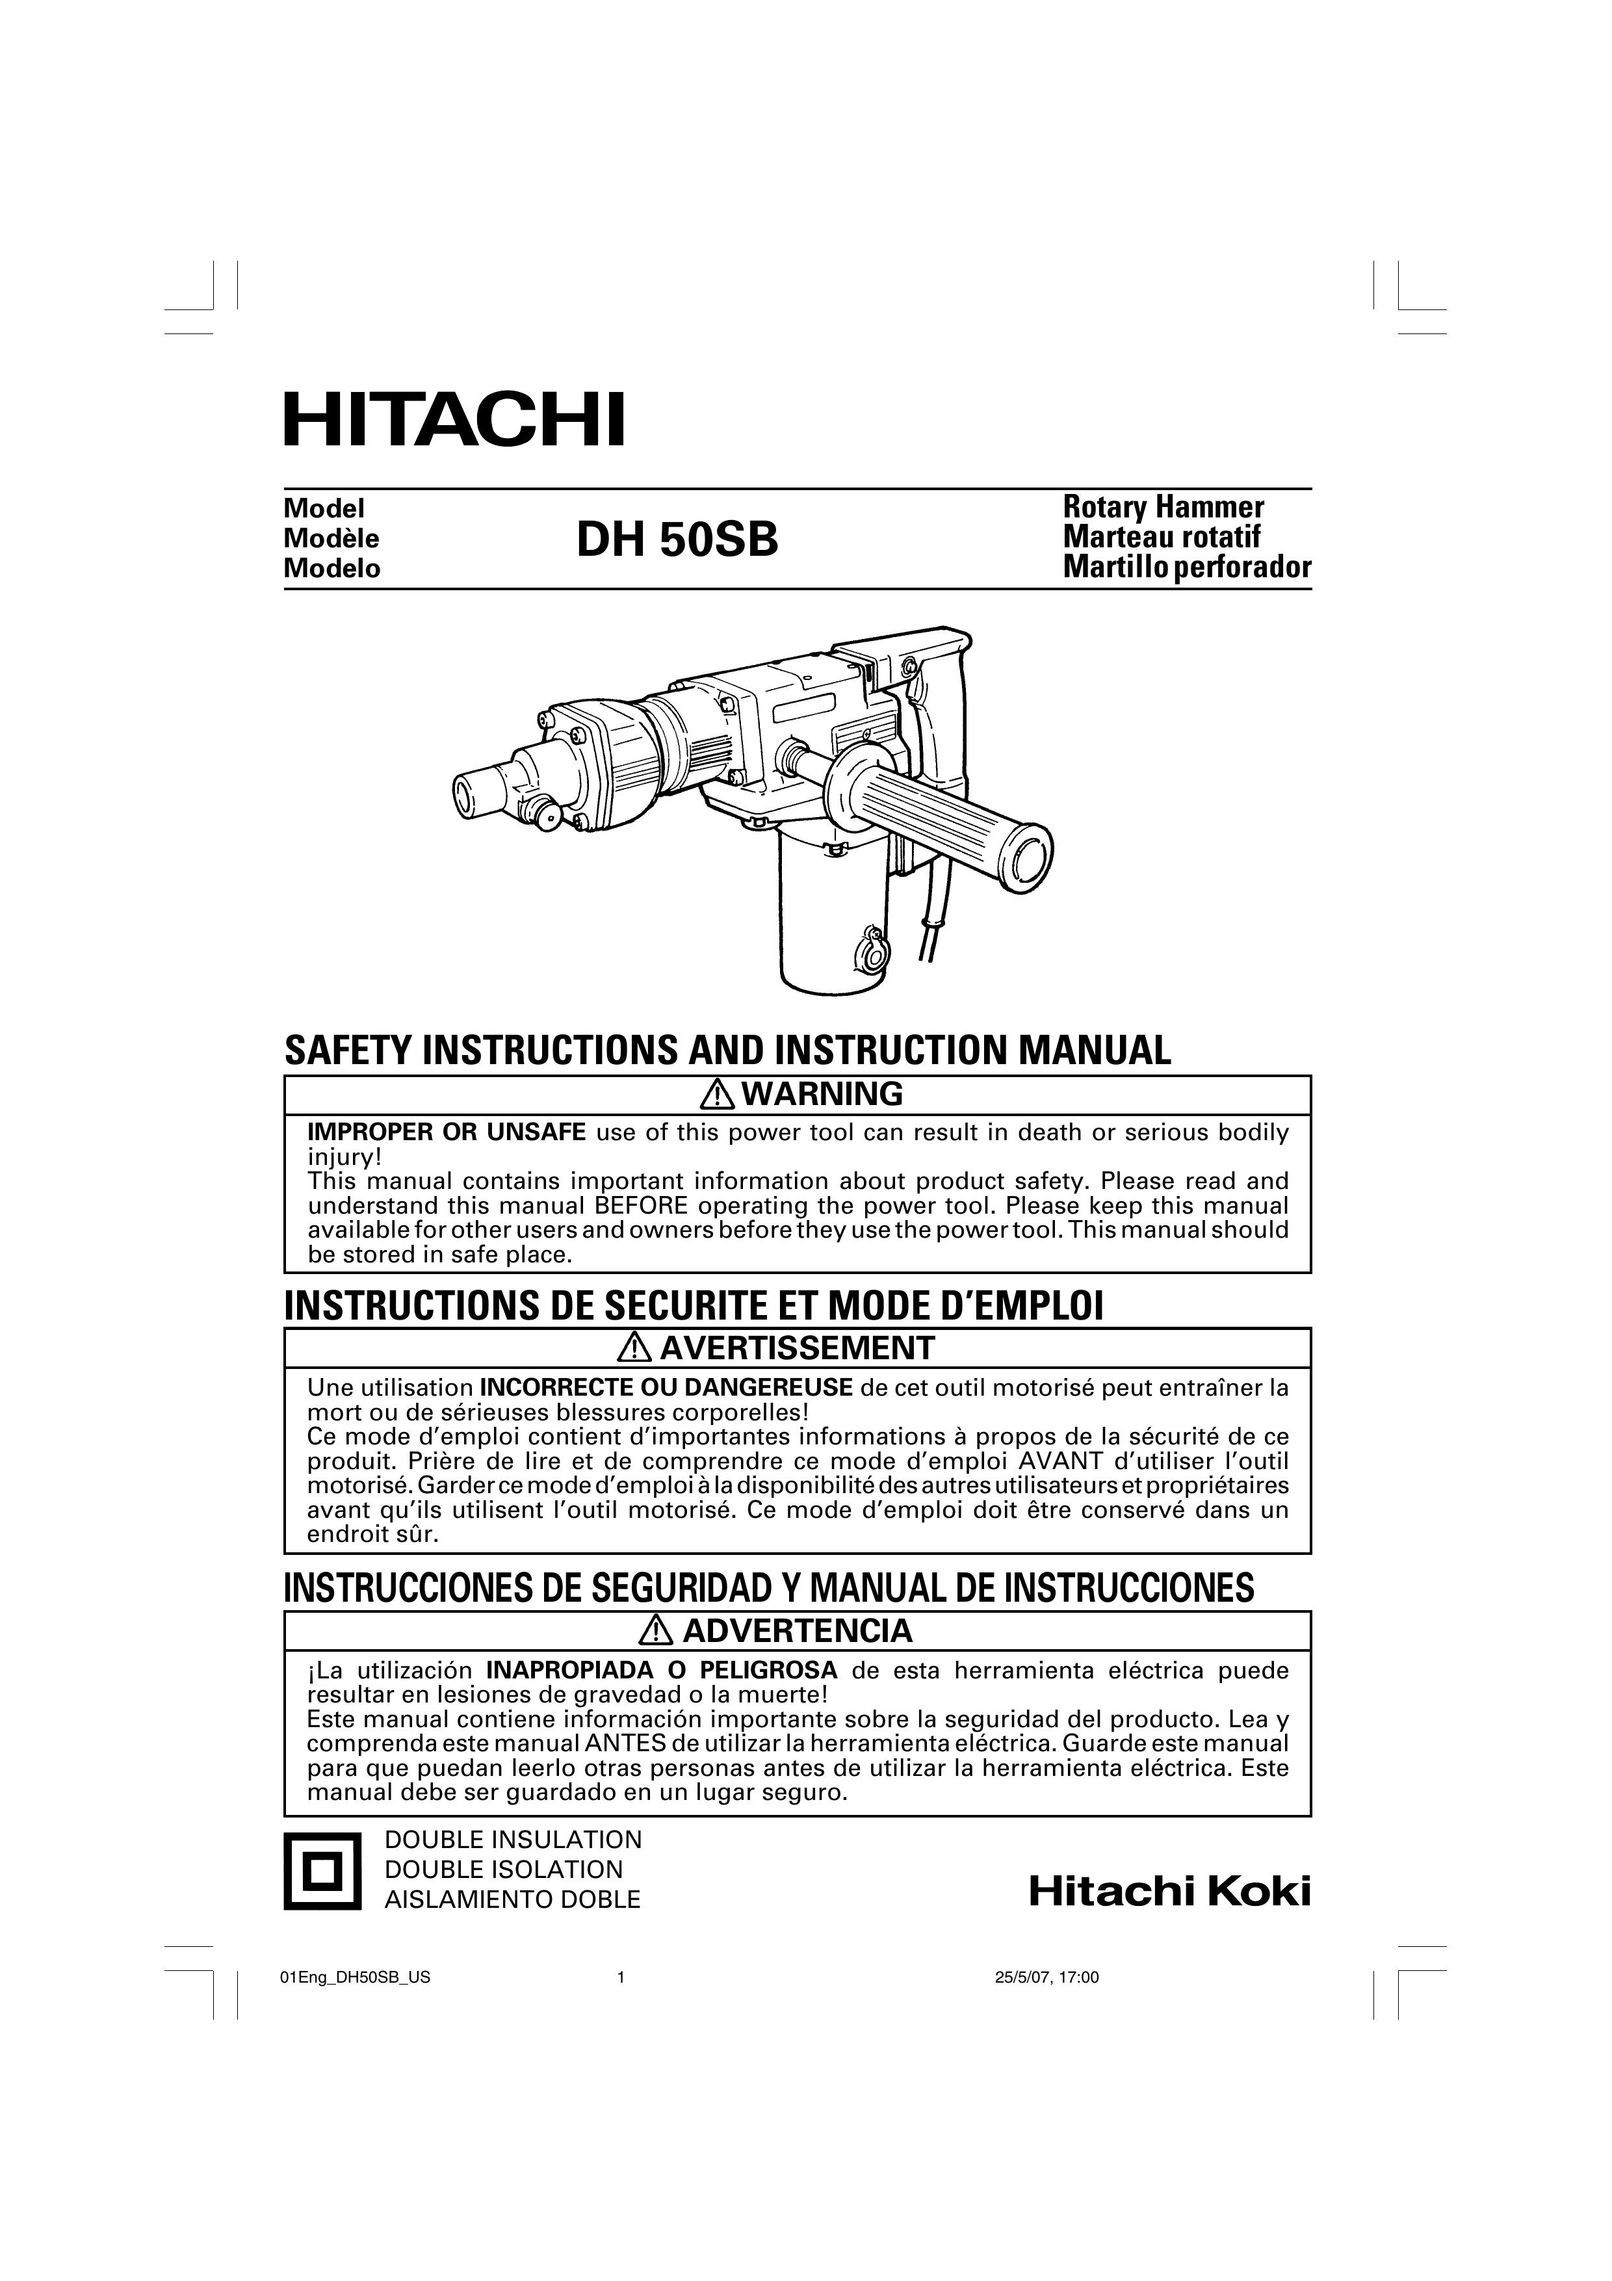 Hitachi DH 50SB Power Hammer User Manual